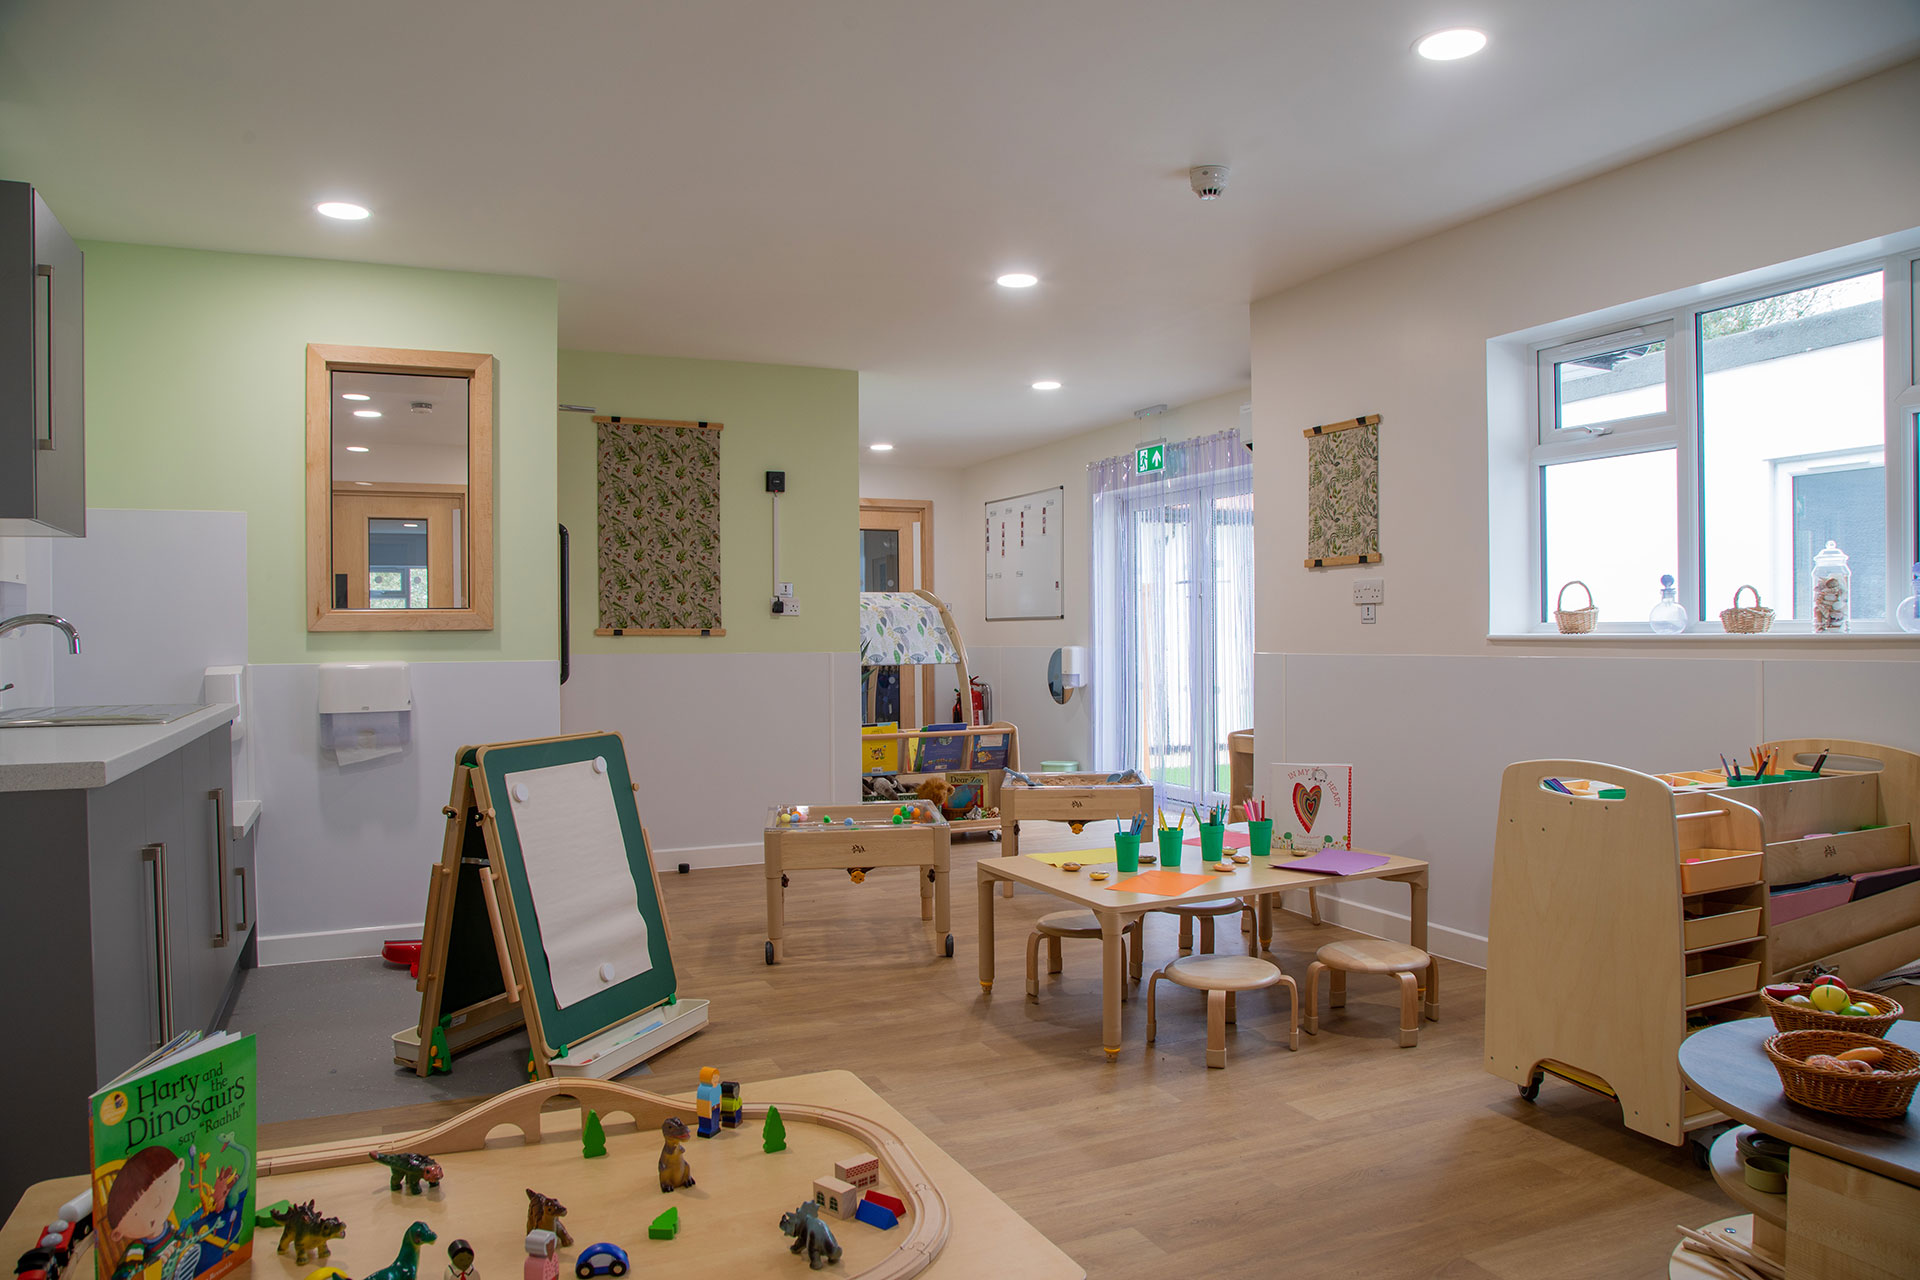 Cedar House Day Nursery and Preschool